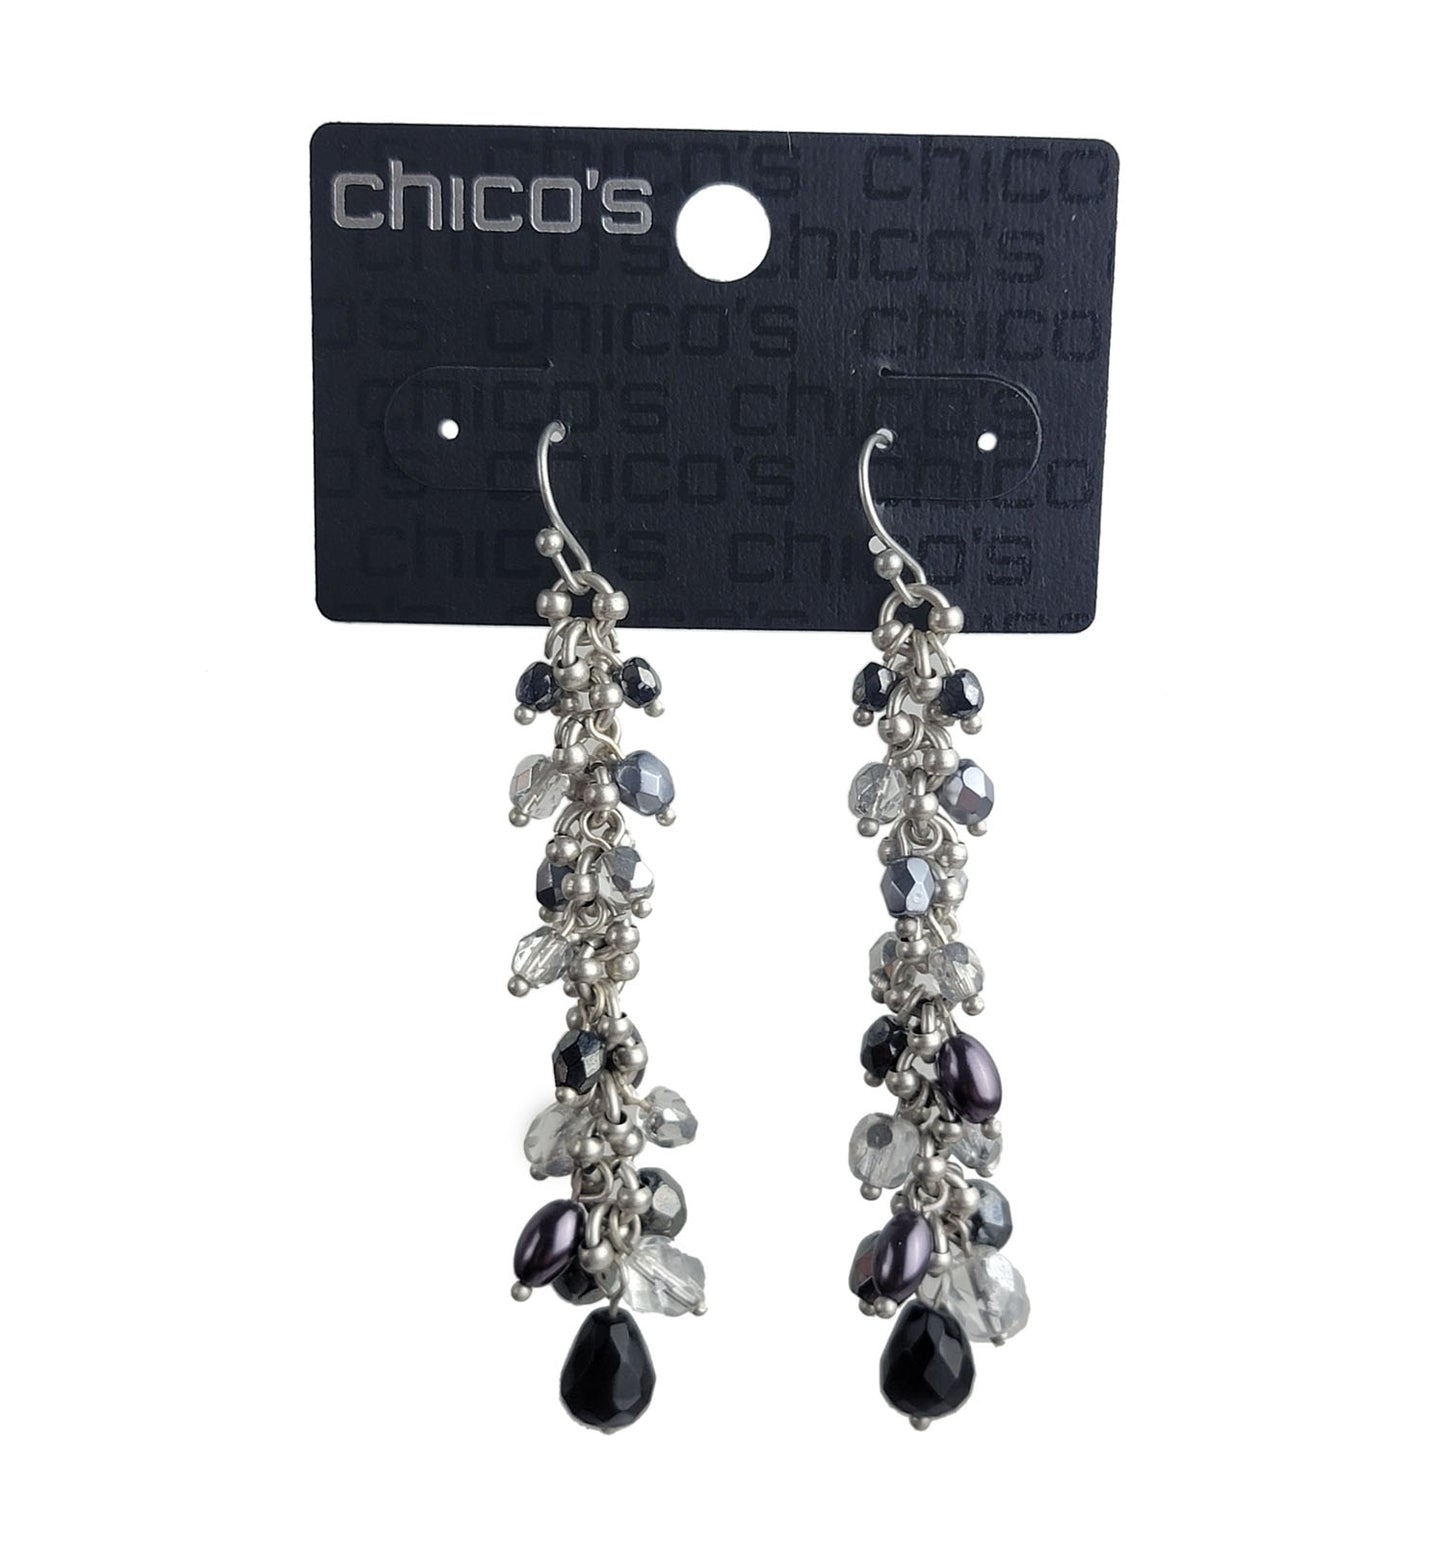 Chicos Paulee Earrings Black Clear & Gray Crystal Beaded Drops